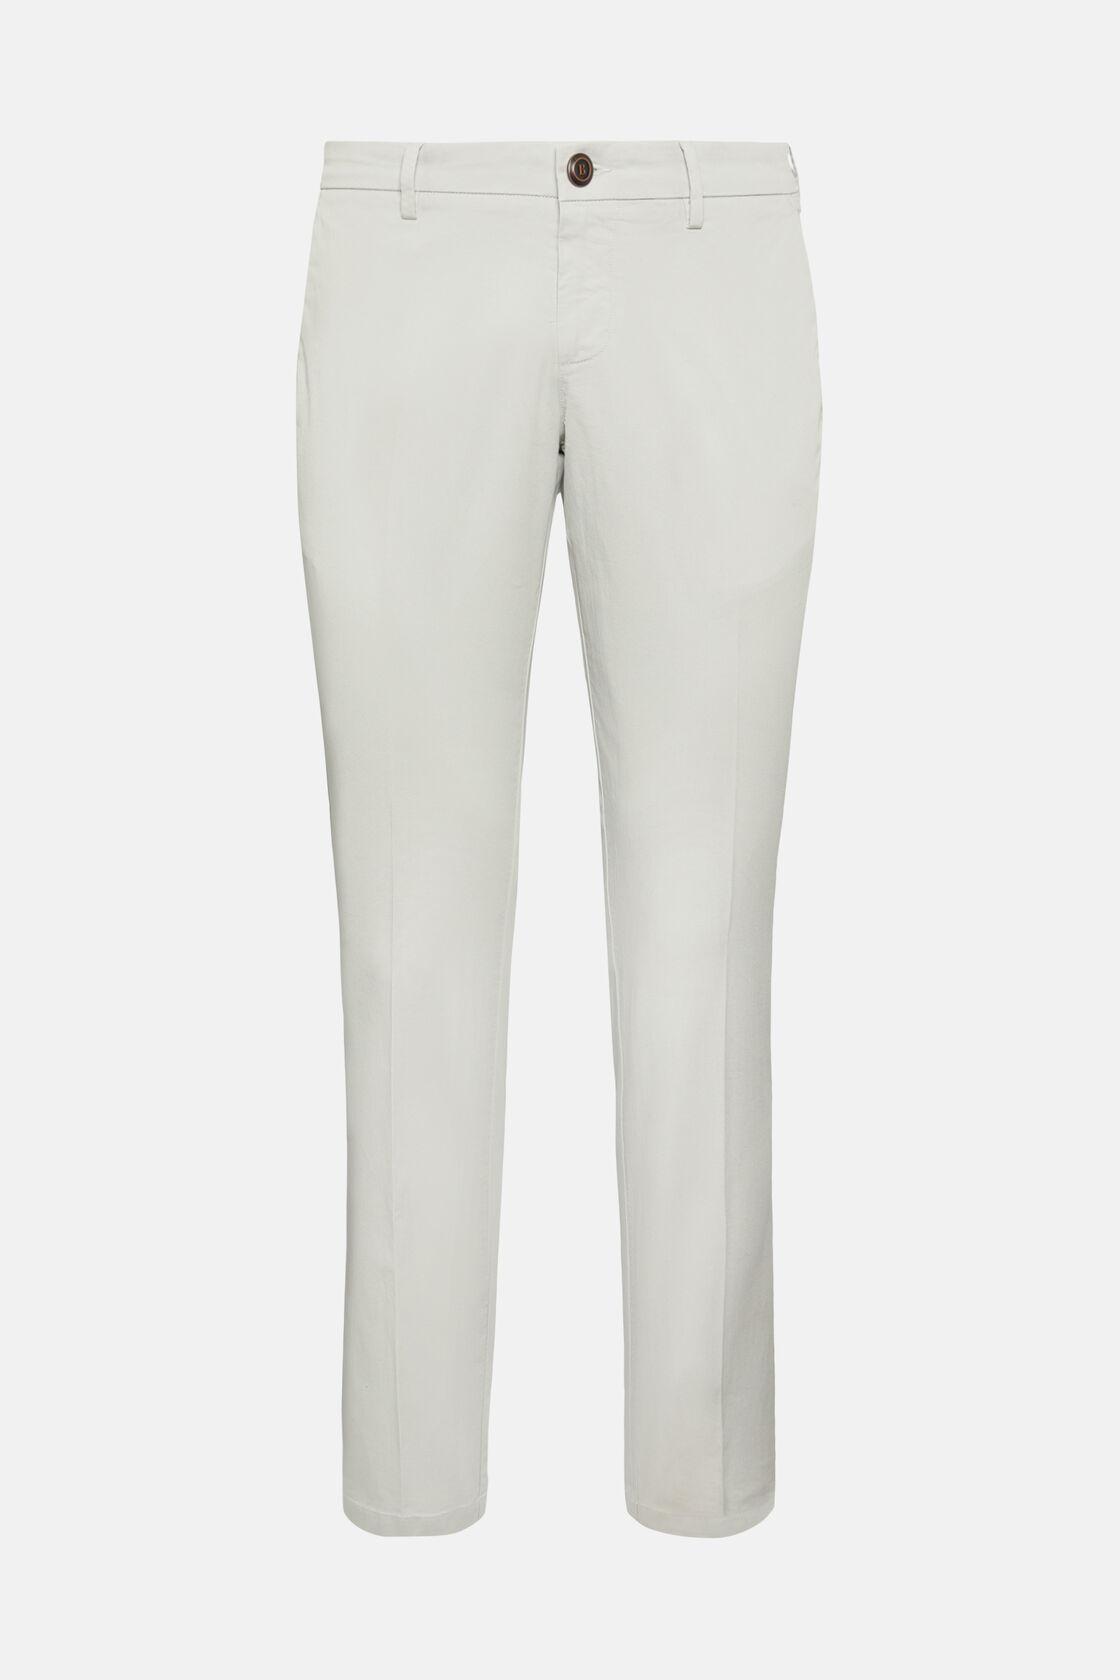 Pantalon En Coton Extensible, Light grey, hi-res